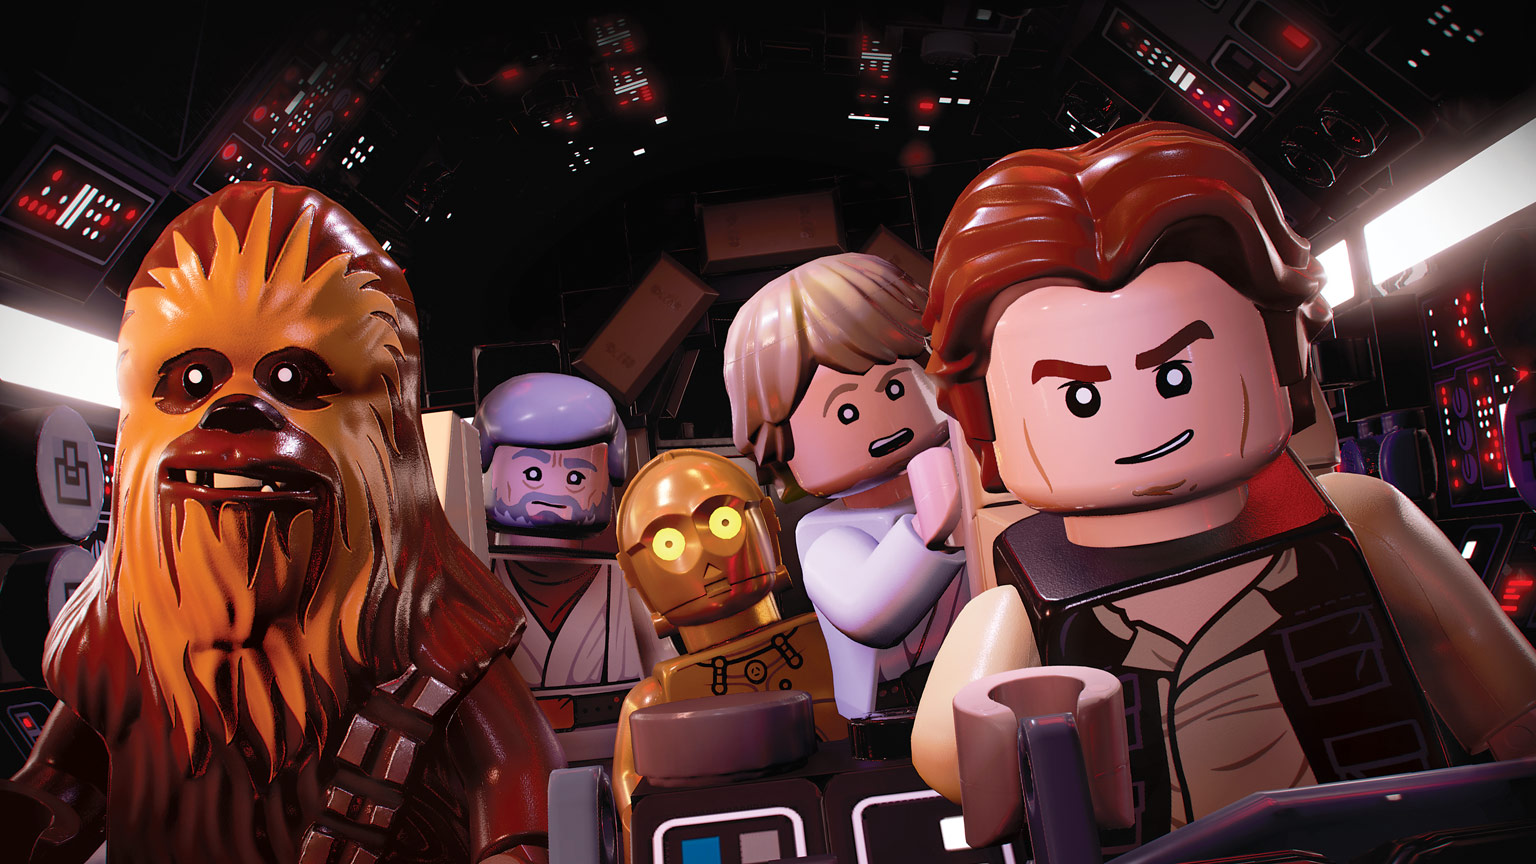 Where to Find the Echo Base Datacard in Lego Star Wars The Skywalker Saga